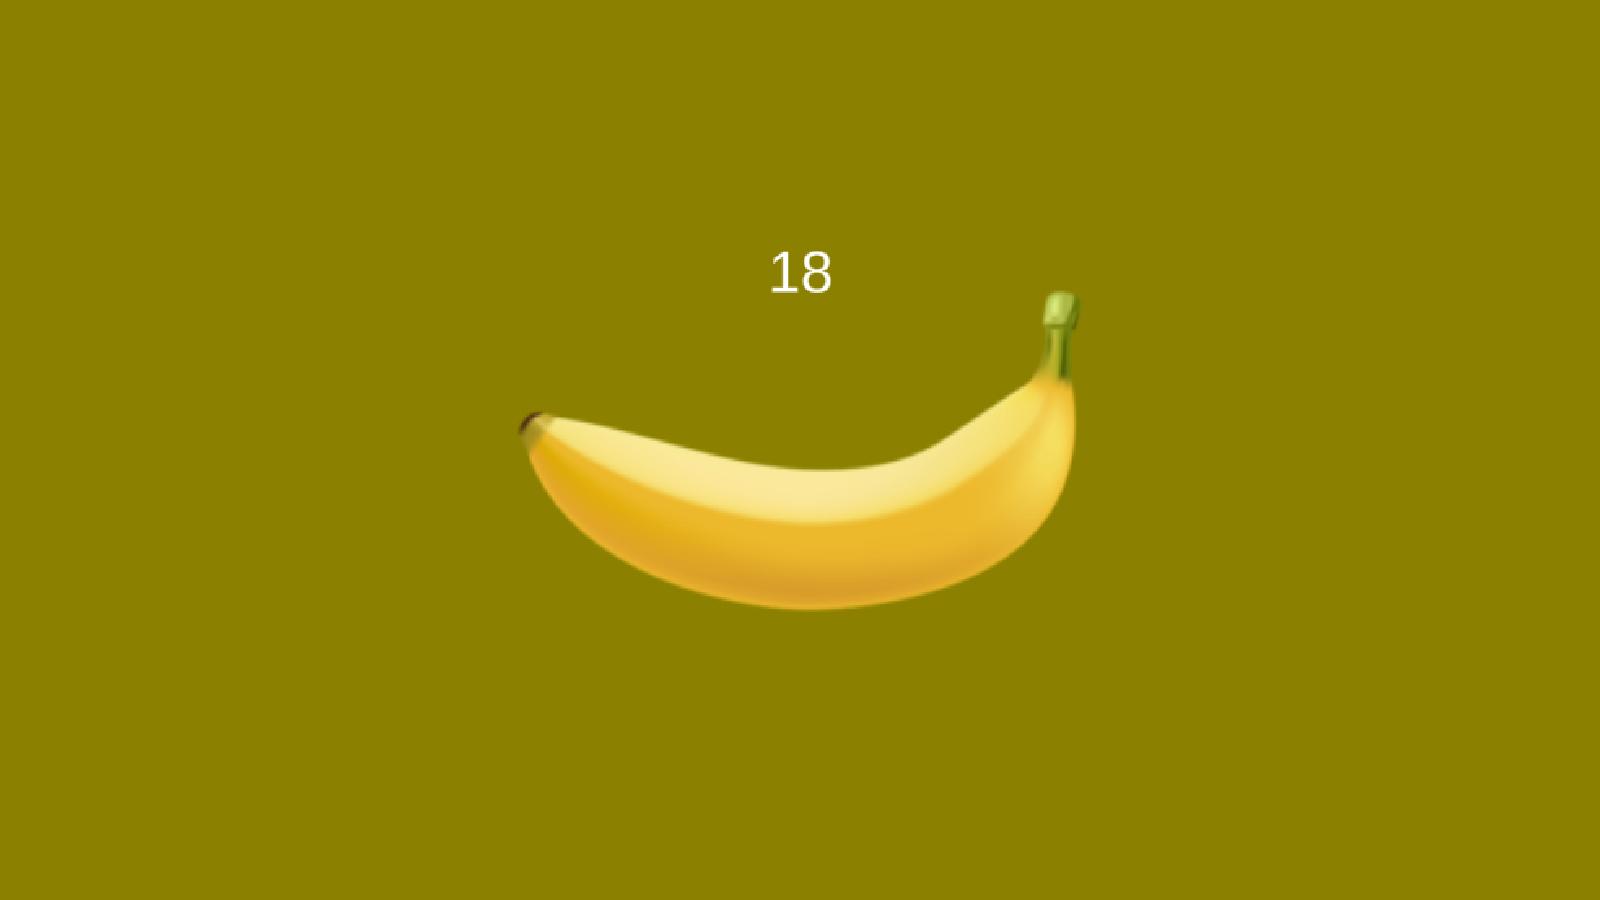 Banana game screenshot